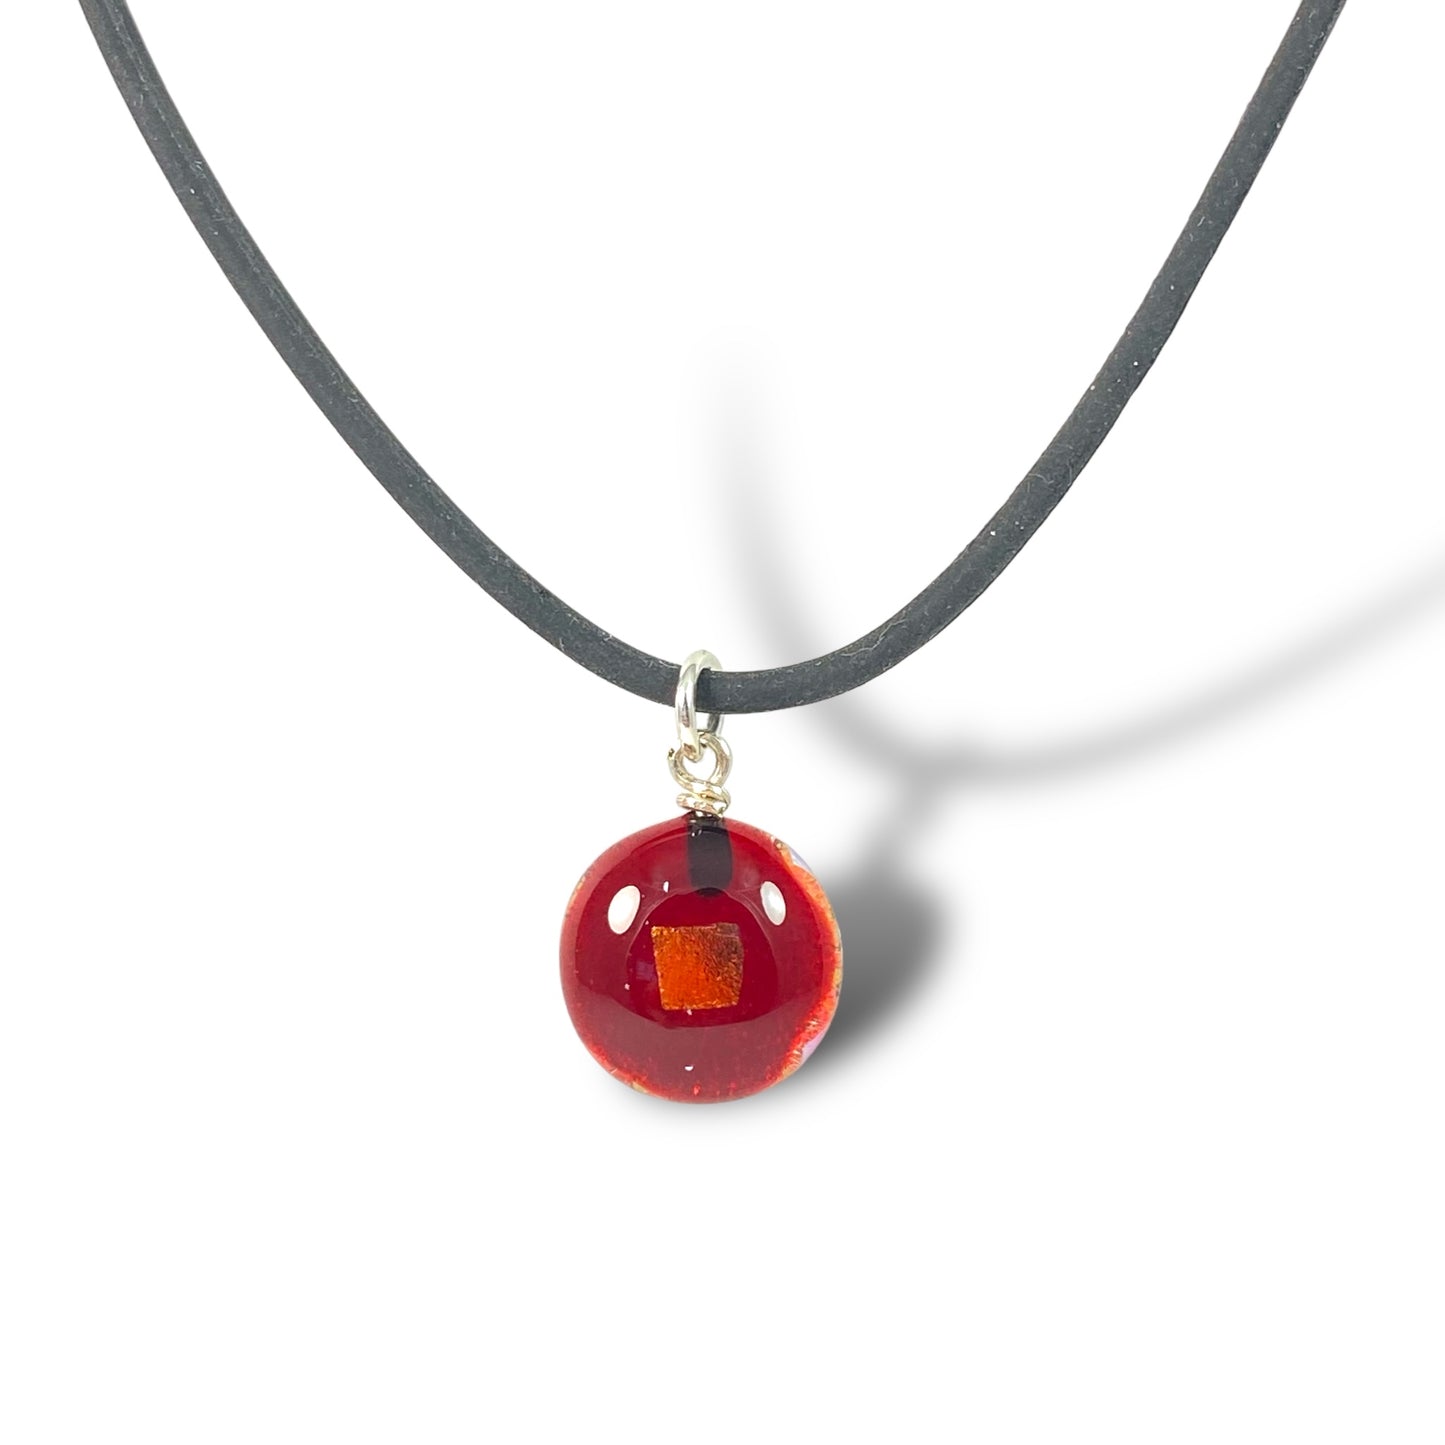 Space Ball Necklace in Dark Cherry